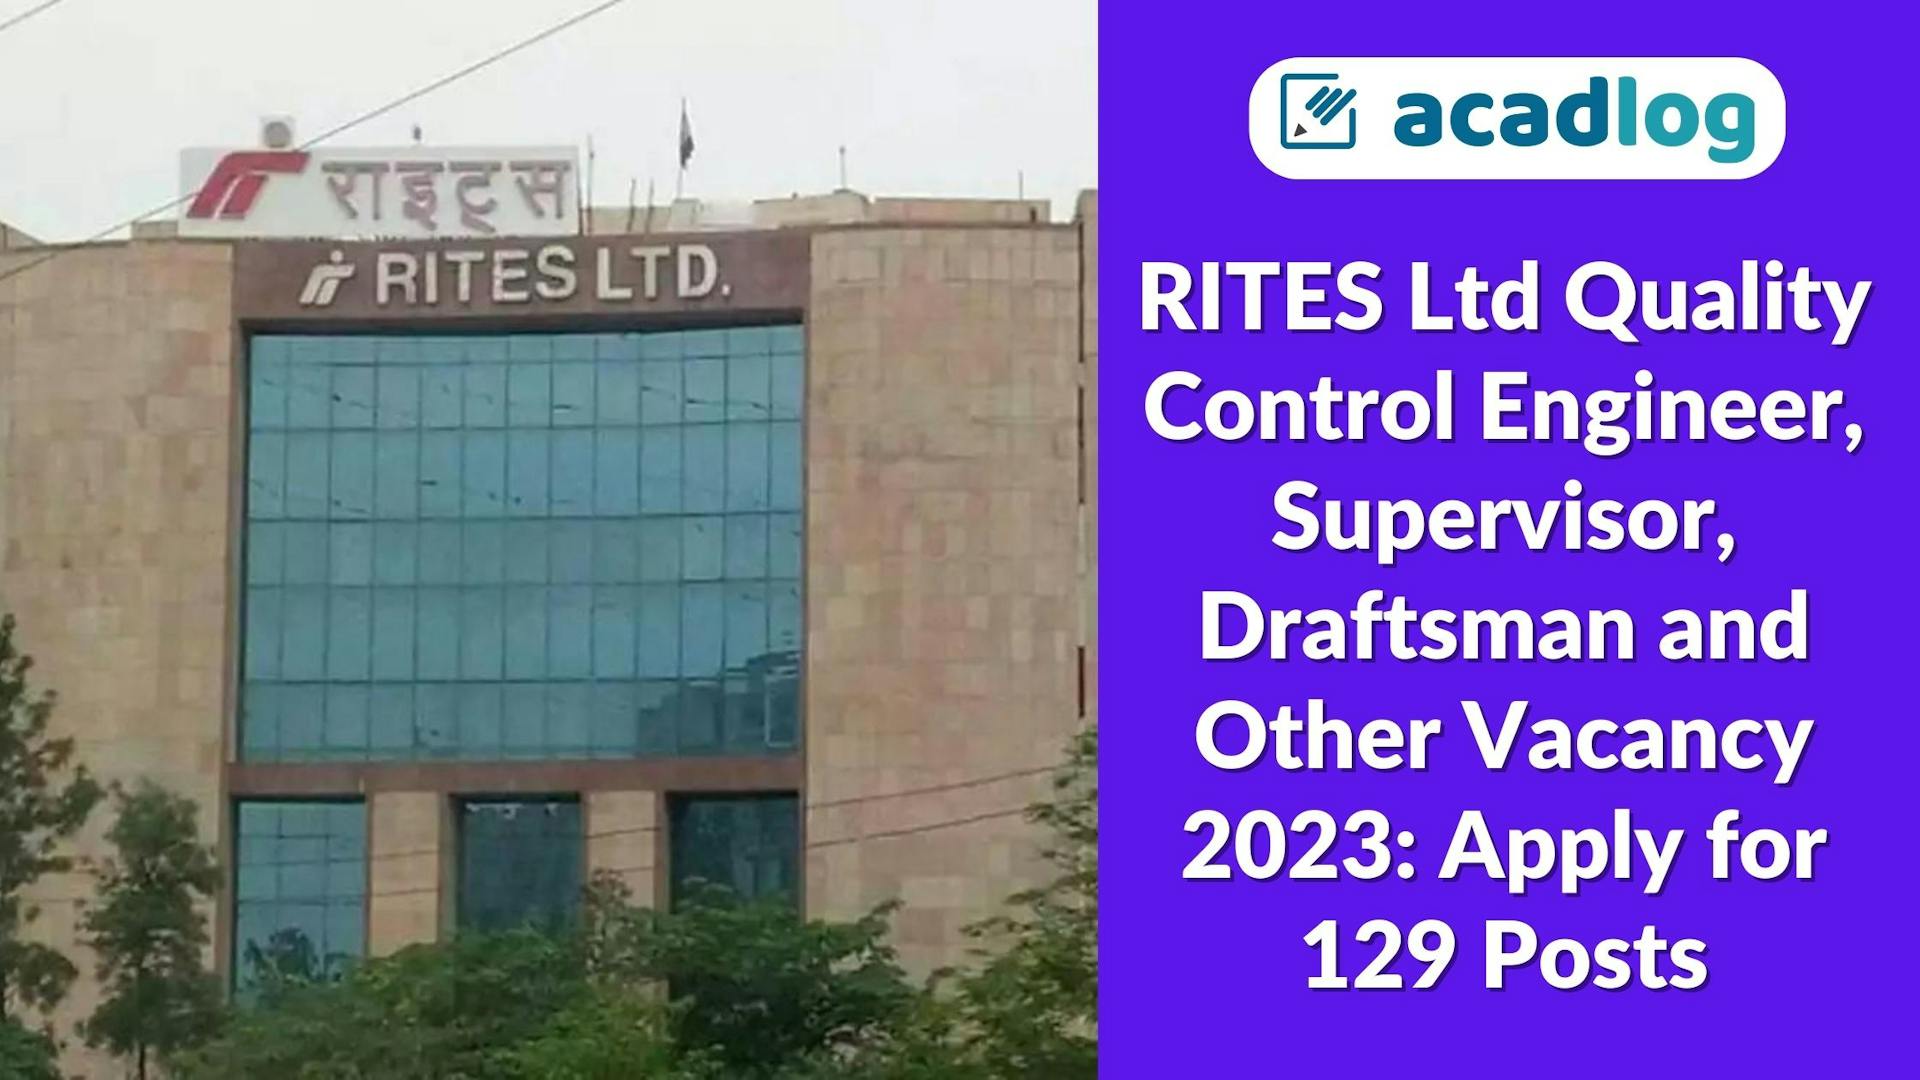 RITES Ltd Quality Control Engineer, Supervisor, Draftsman Vacancy 2023: Apply for 129 Posts